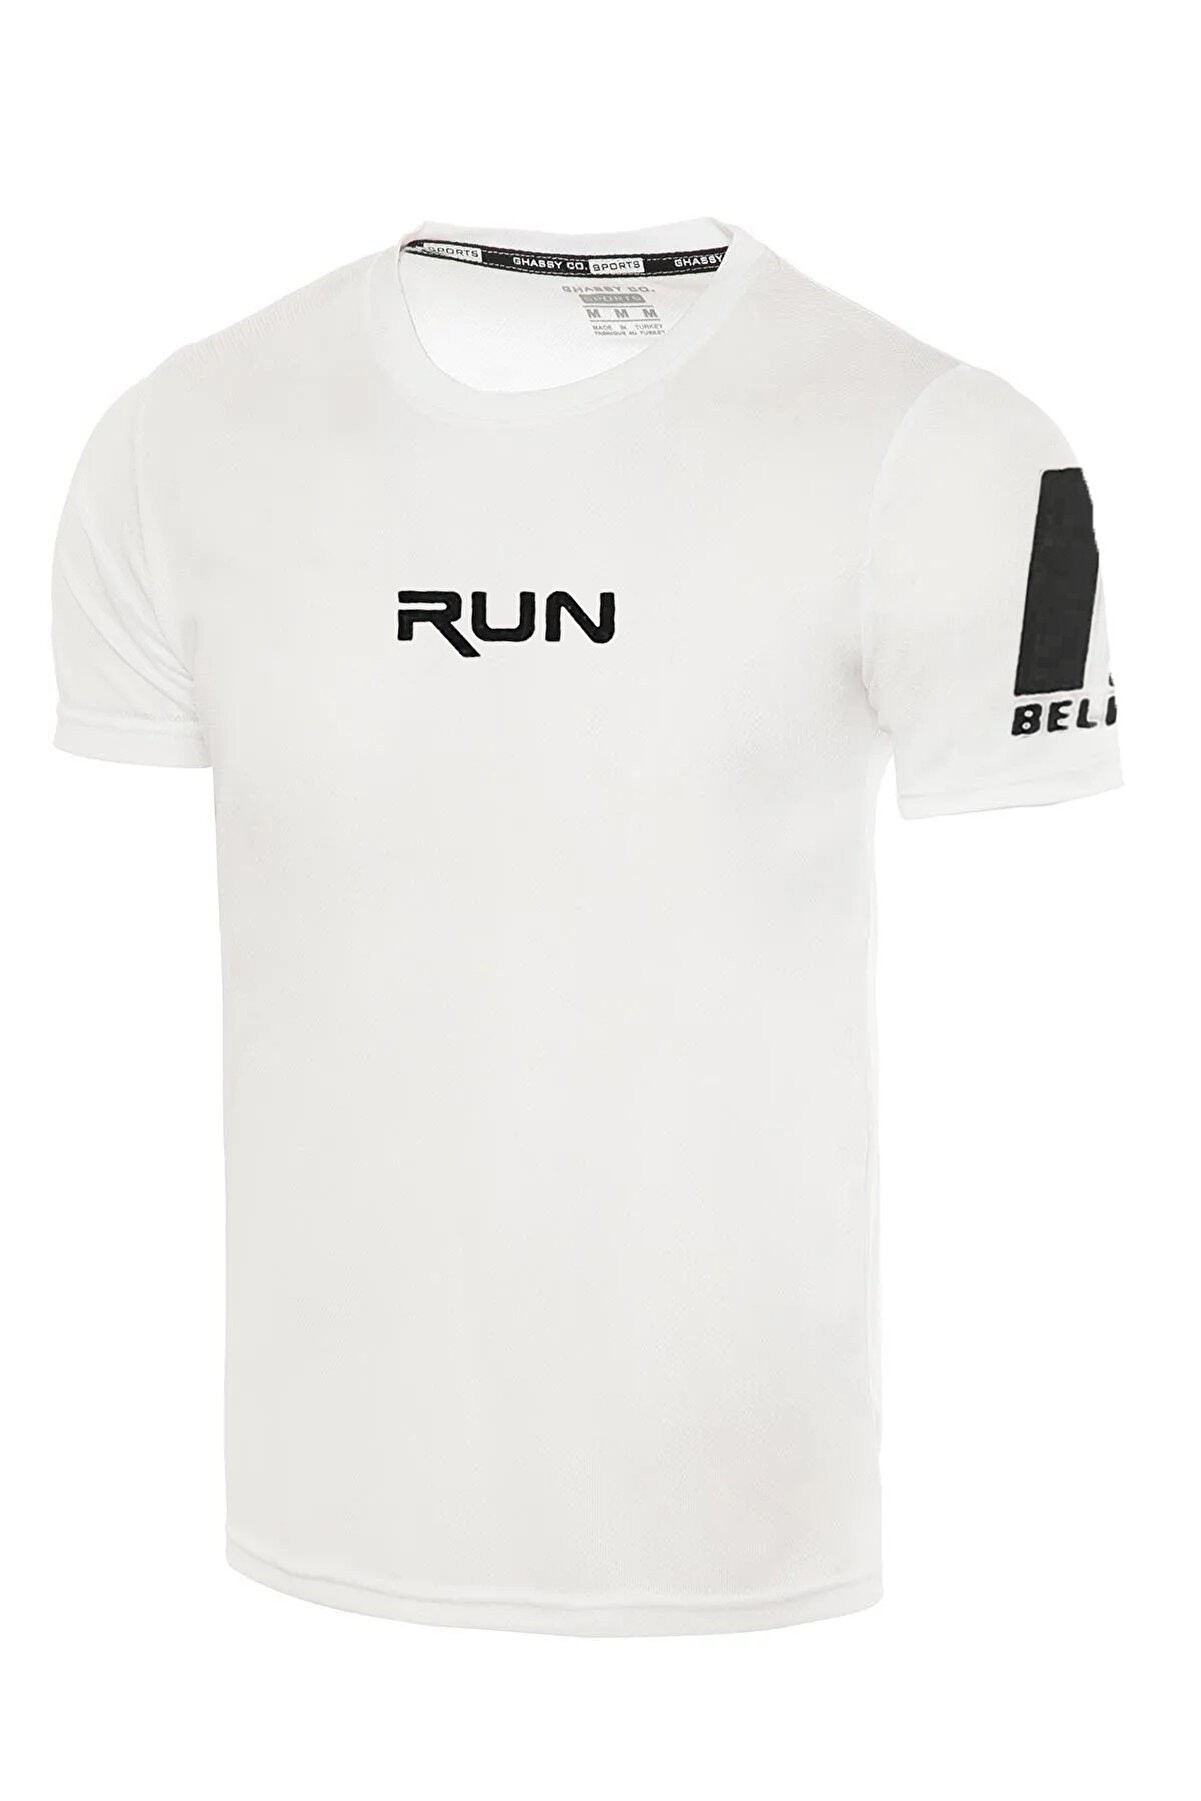 Ghassy Co Ghassy Co. Erkek Nem Emici Hızlı Kuruma Performans Running Spor T-shirt - BEYAZ